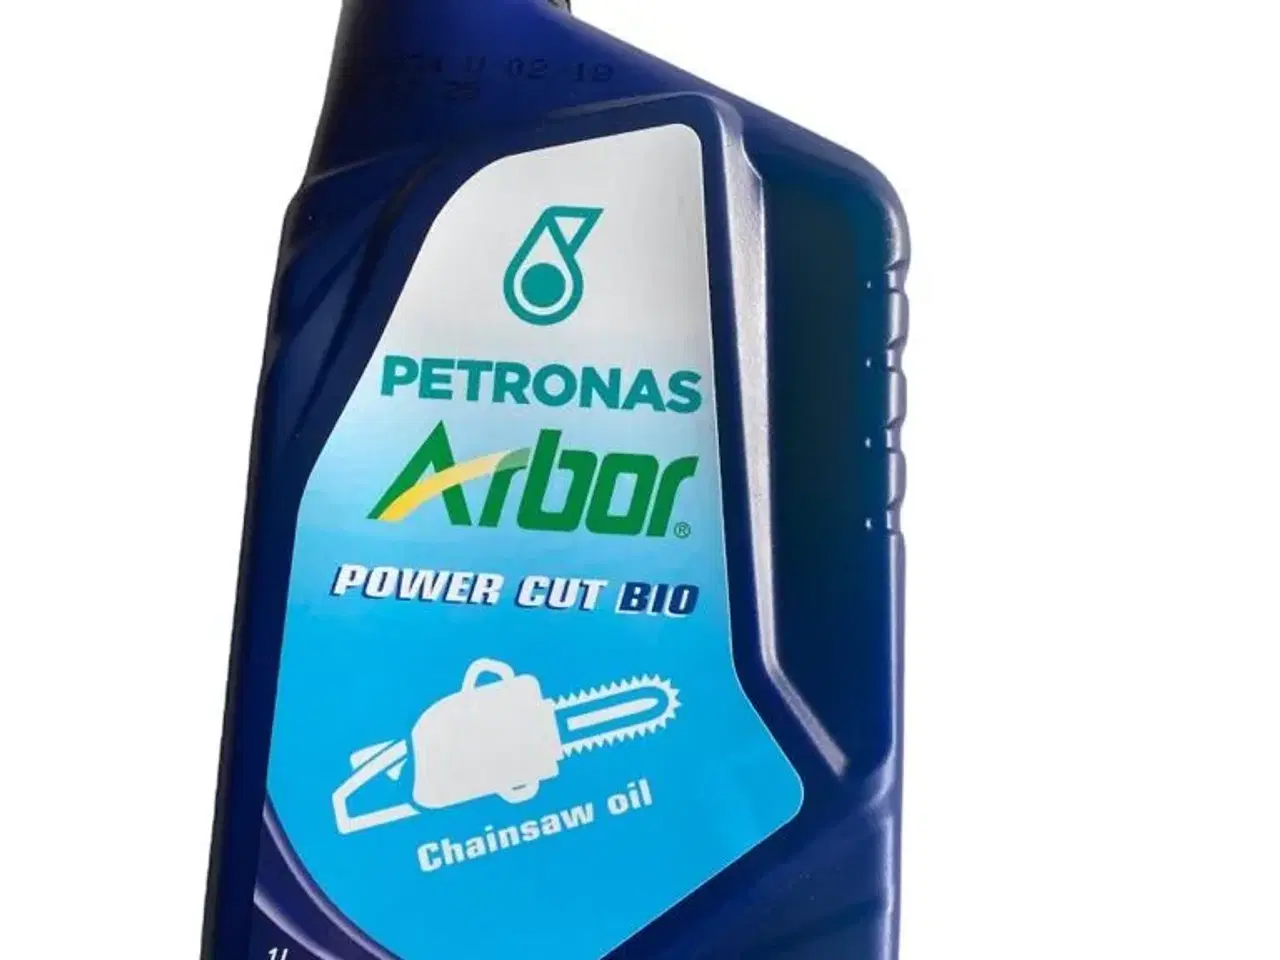 Billede 1 - Petronas arbor power Cut bio